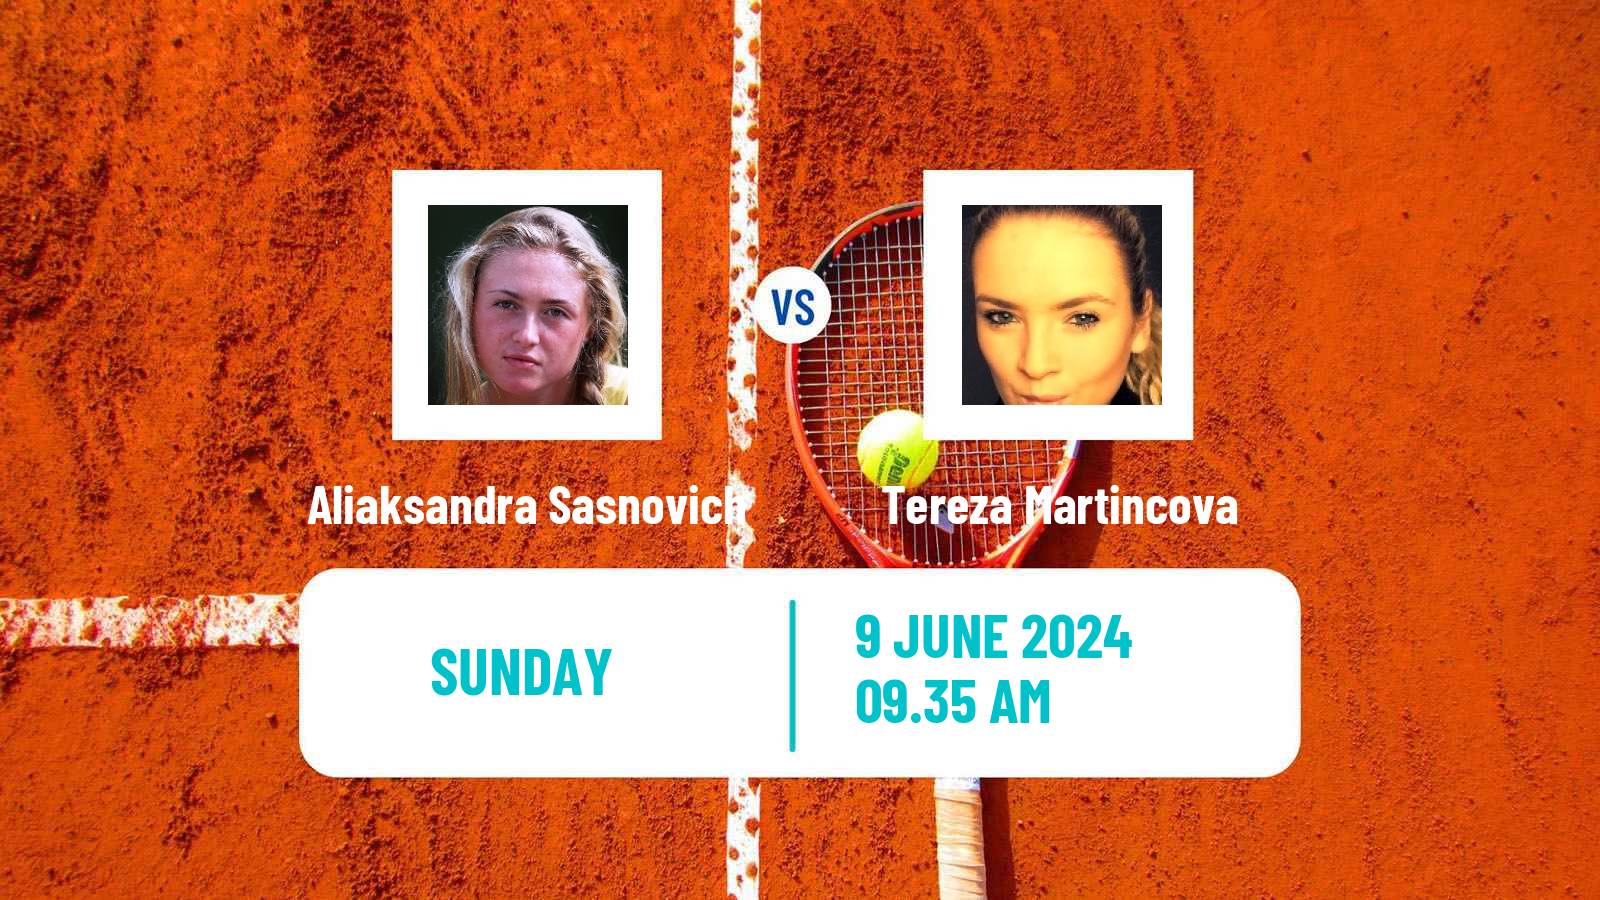 Tennis WTA Hertogenbosch Aliaksandra Sasnovich - Tereza Martincova